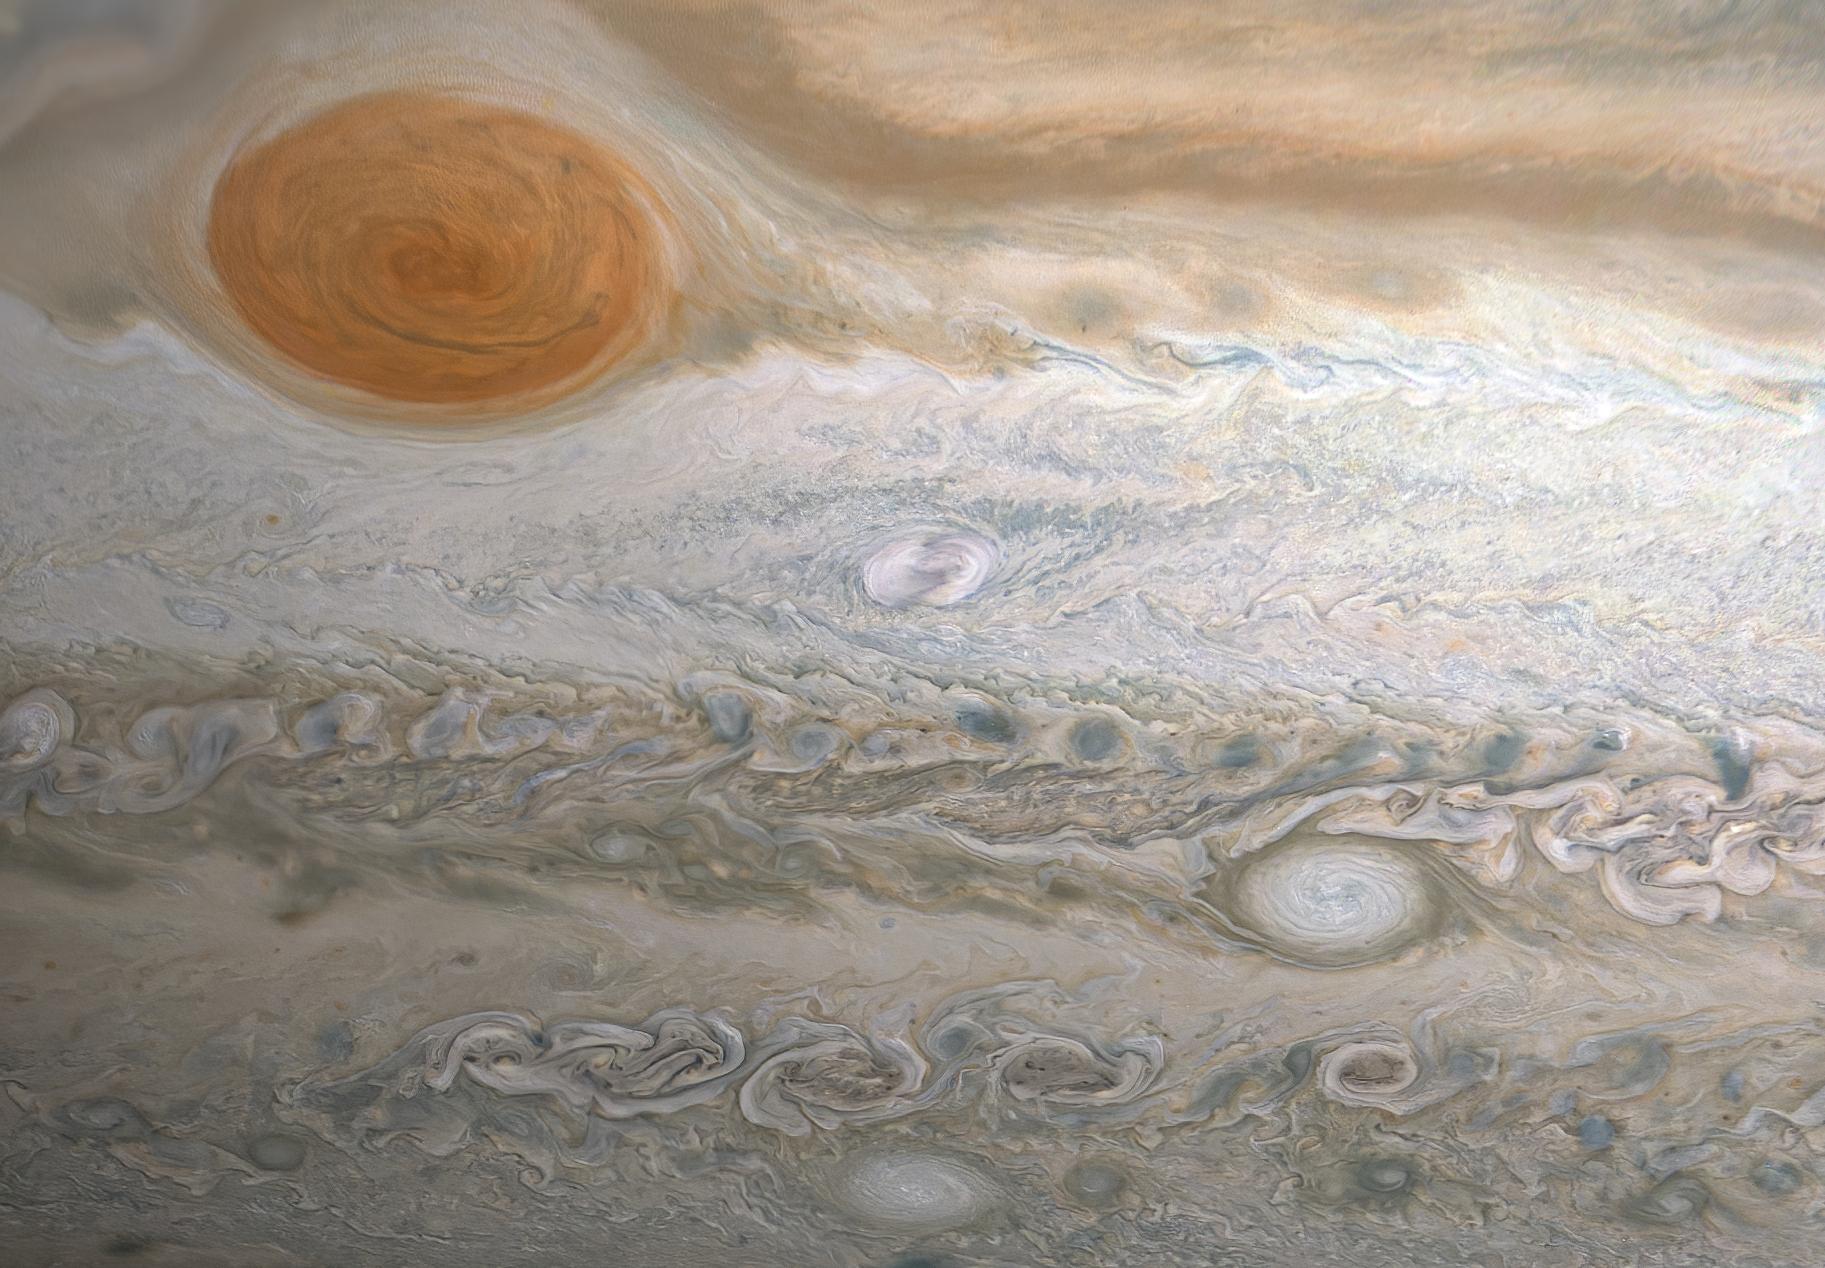 PIA23806: Clyde's Spot on Jupiter